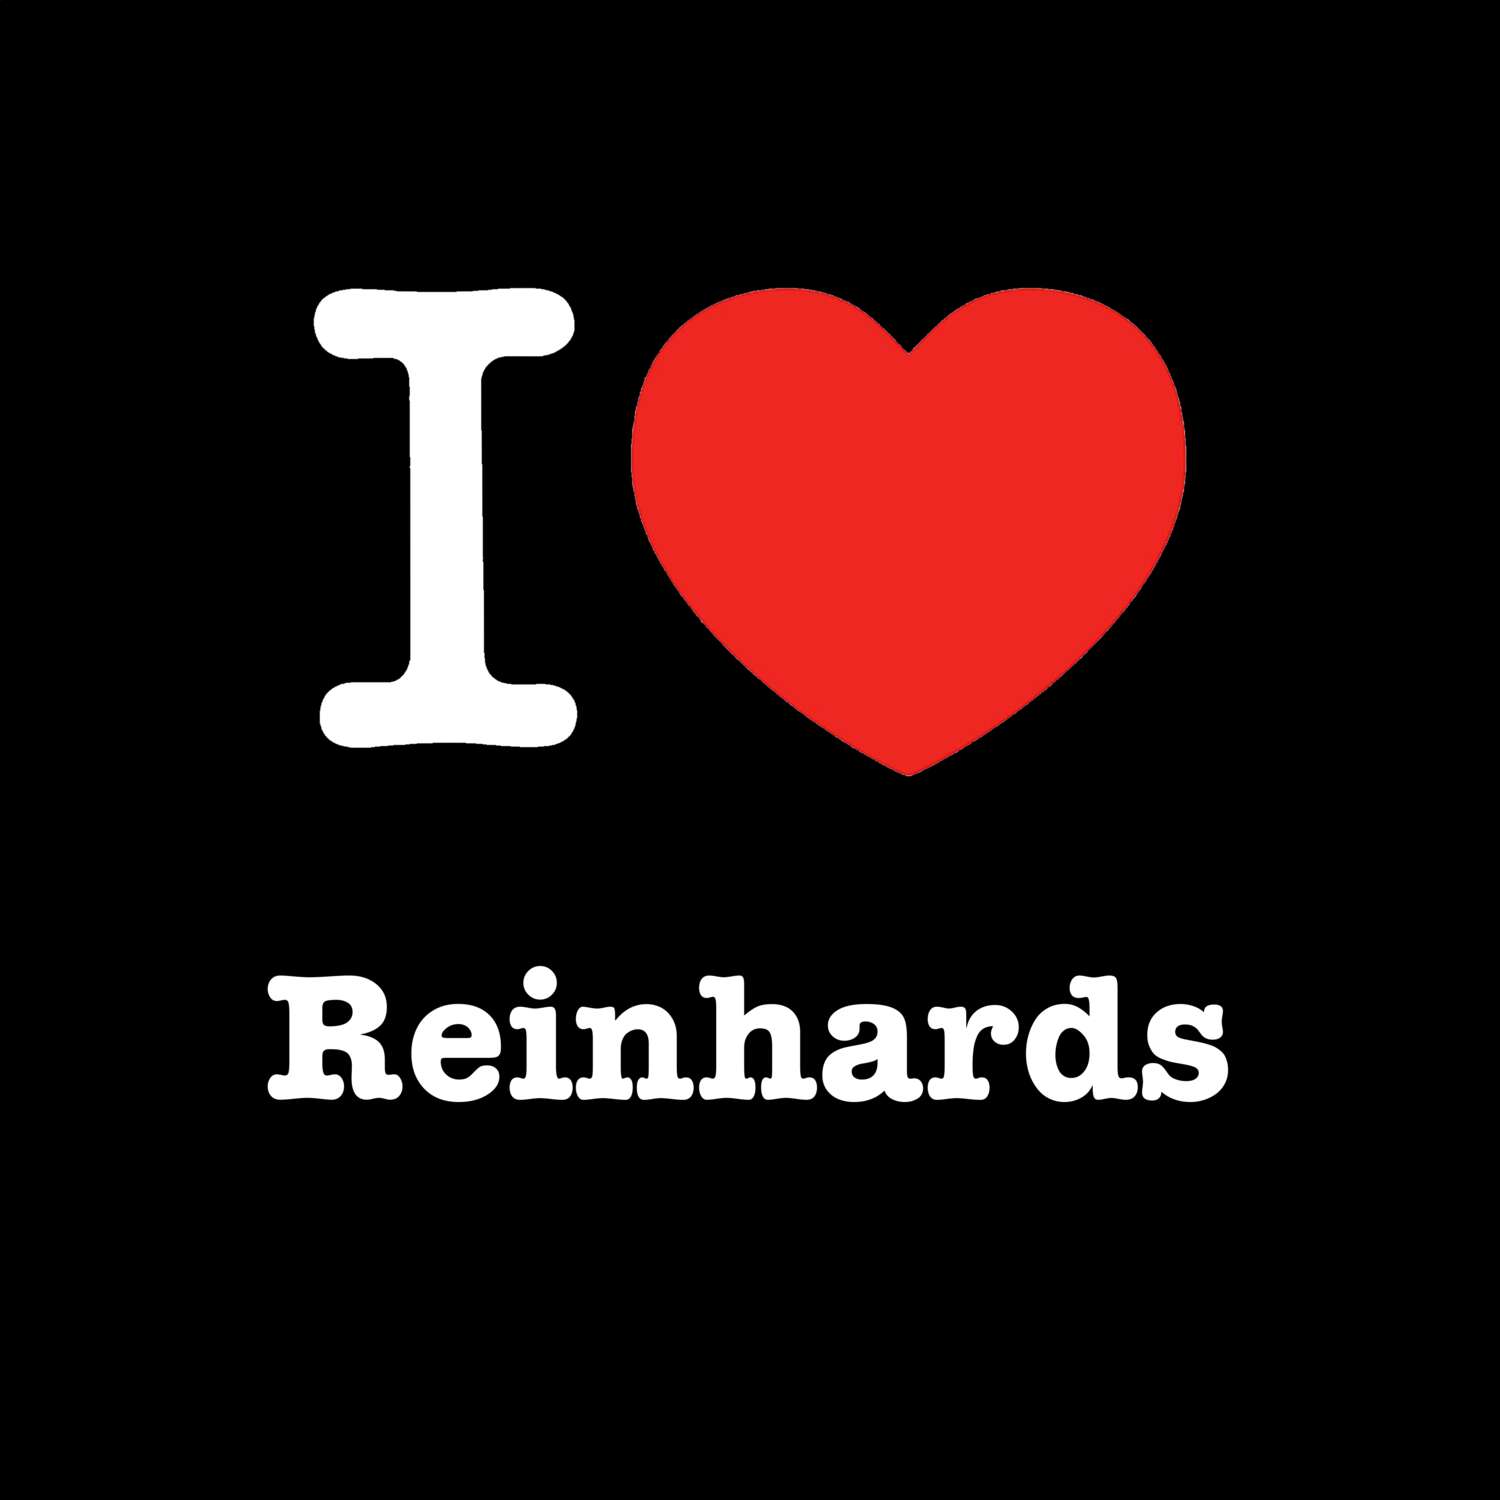 Reinhards T-Shirt »I love«